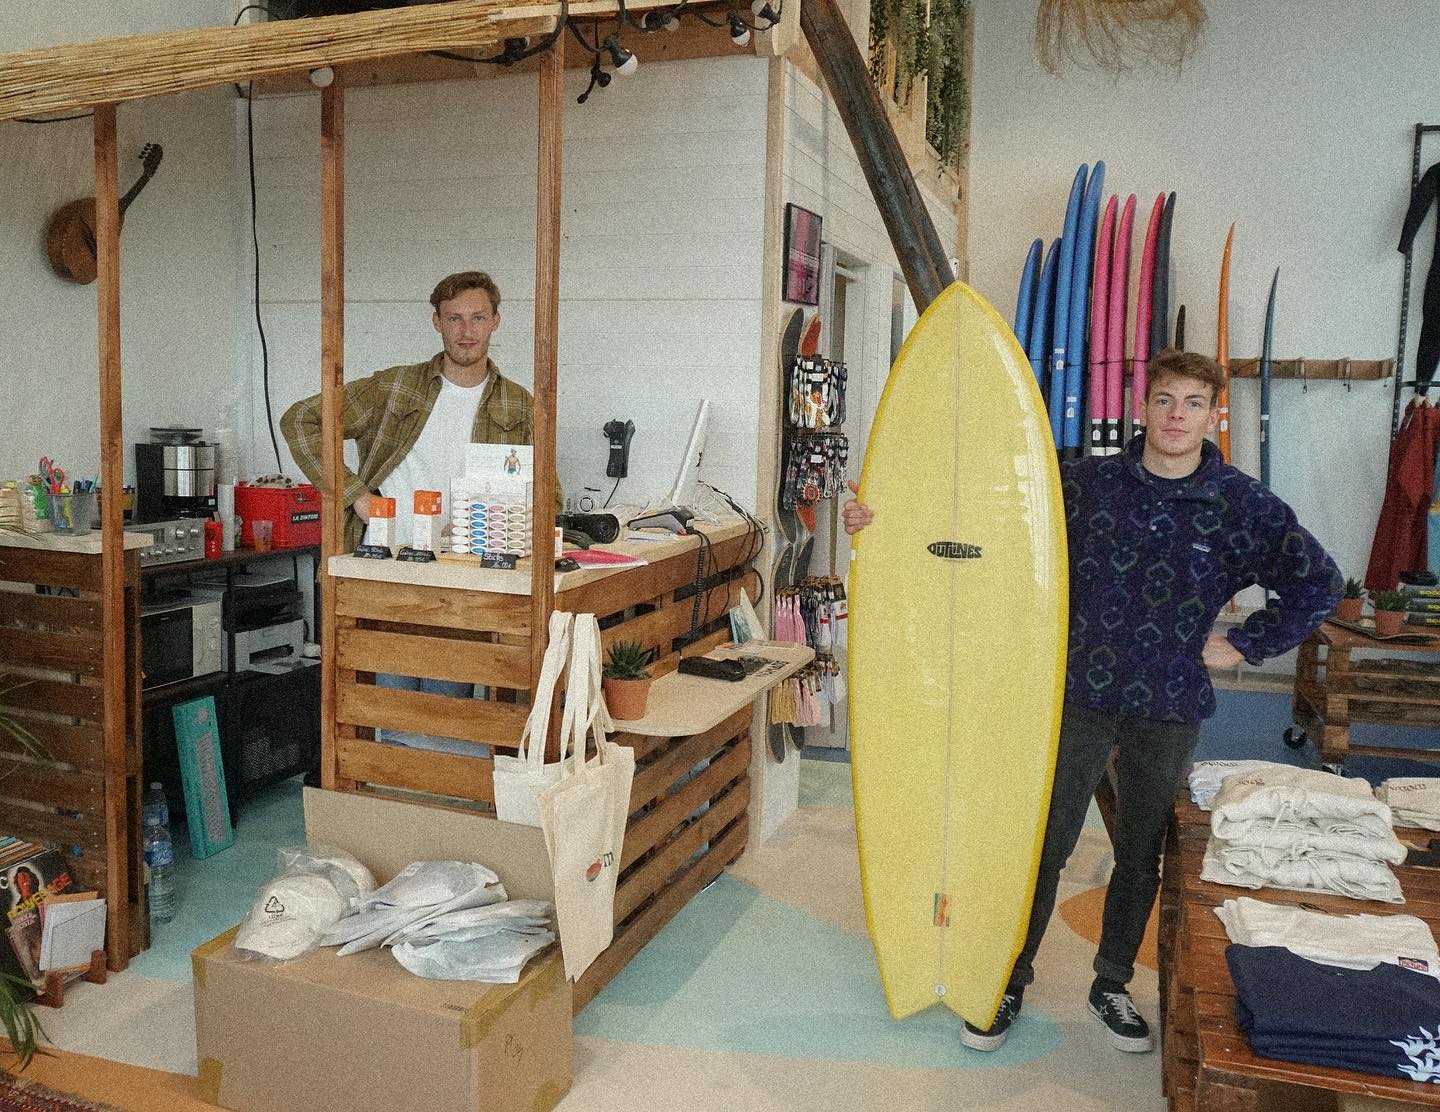 moma surf shop - racktaboard